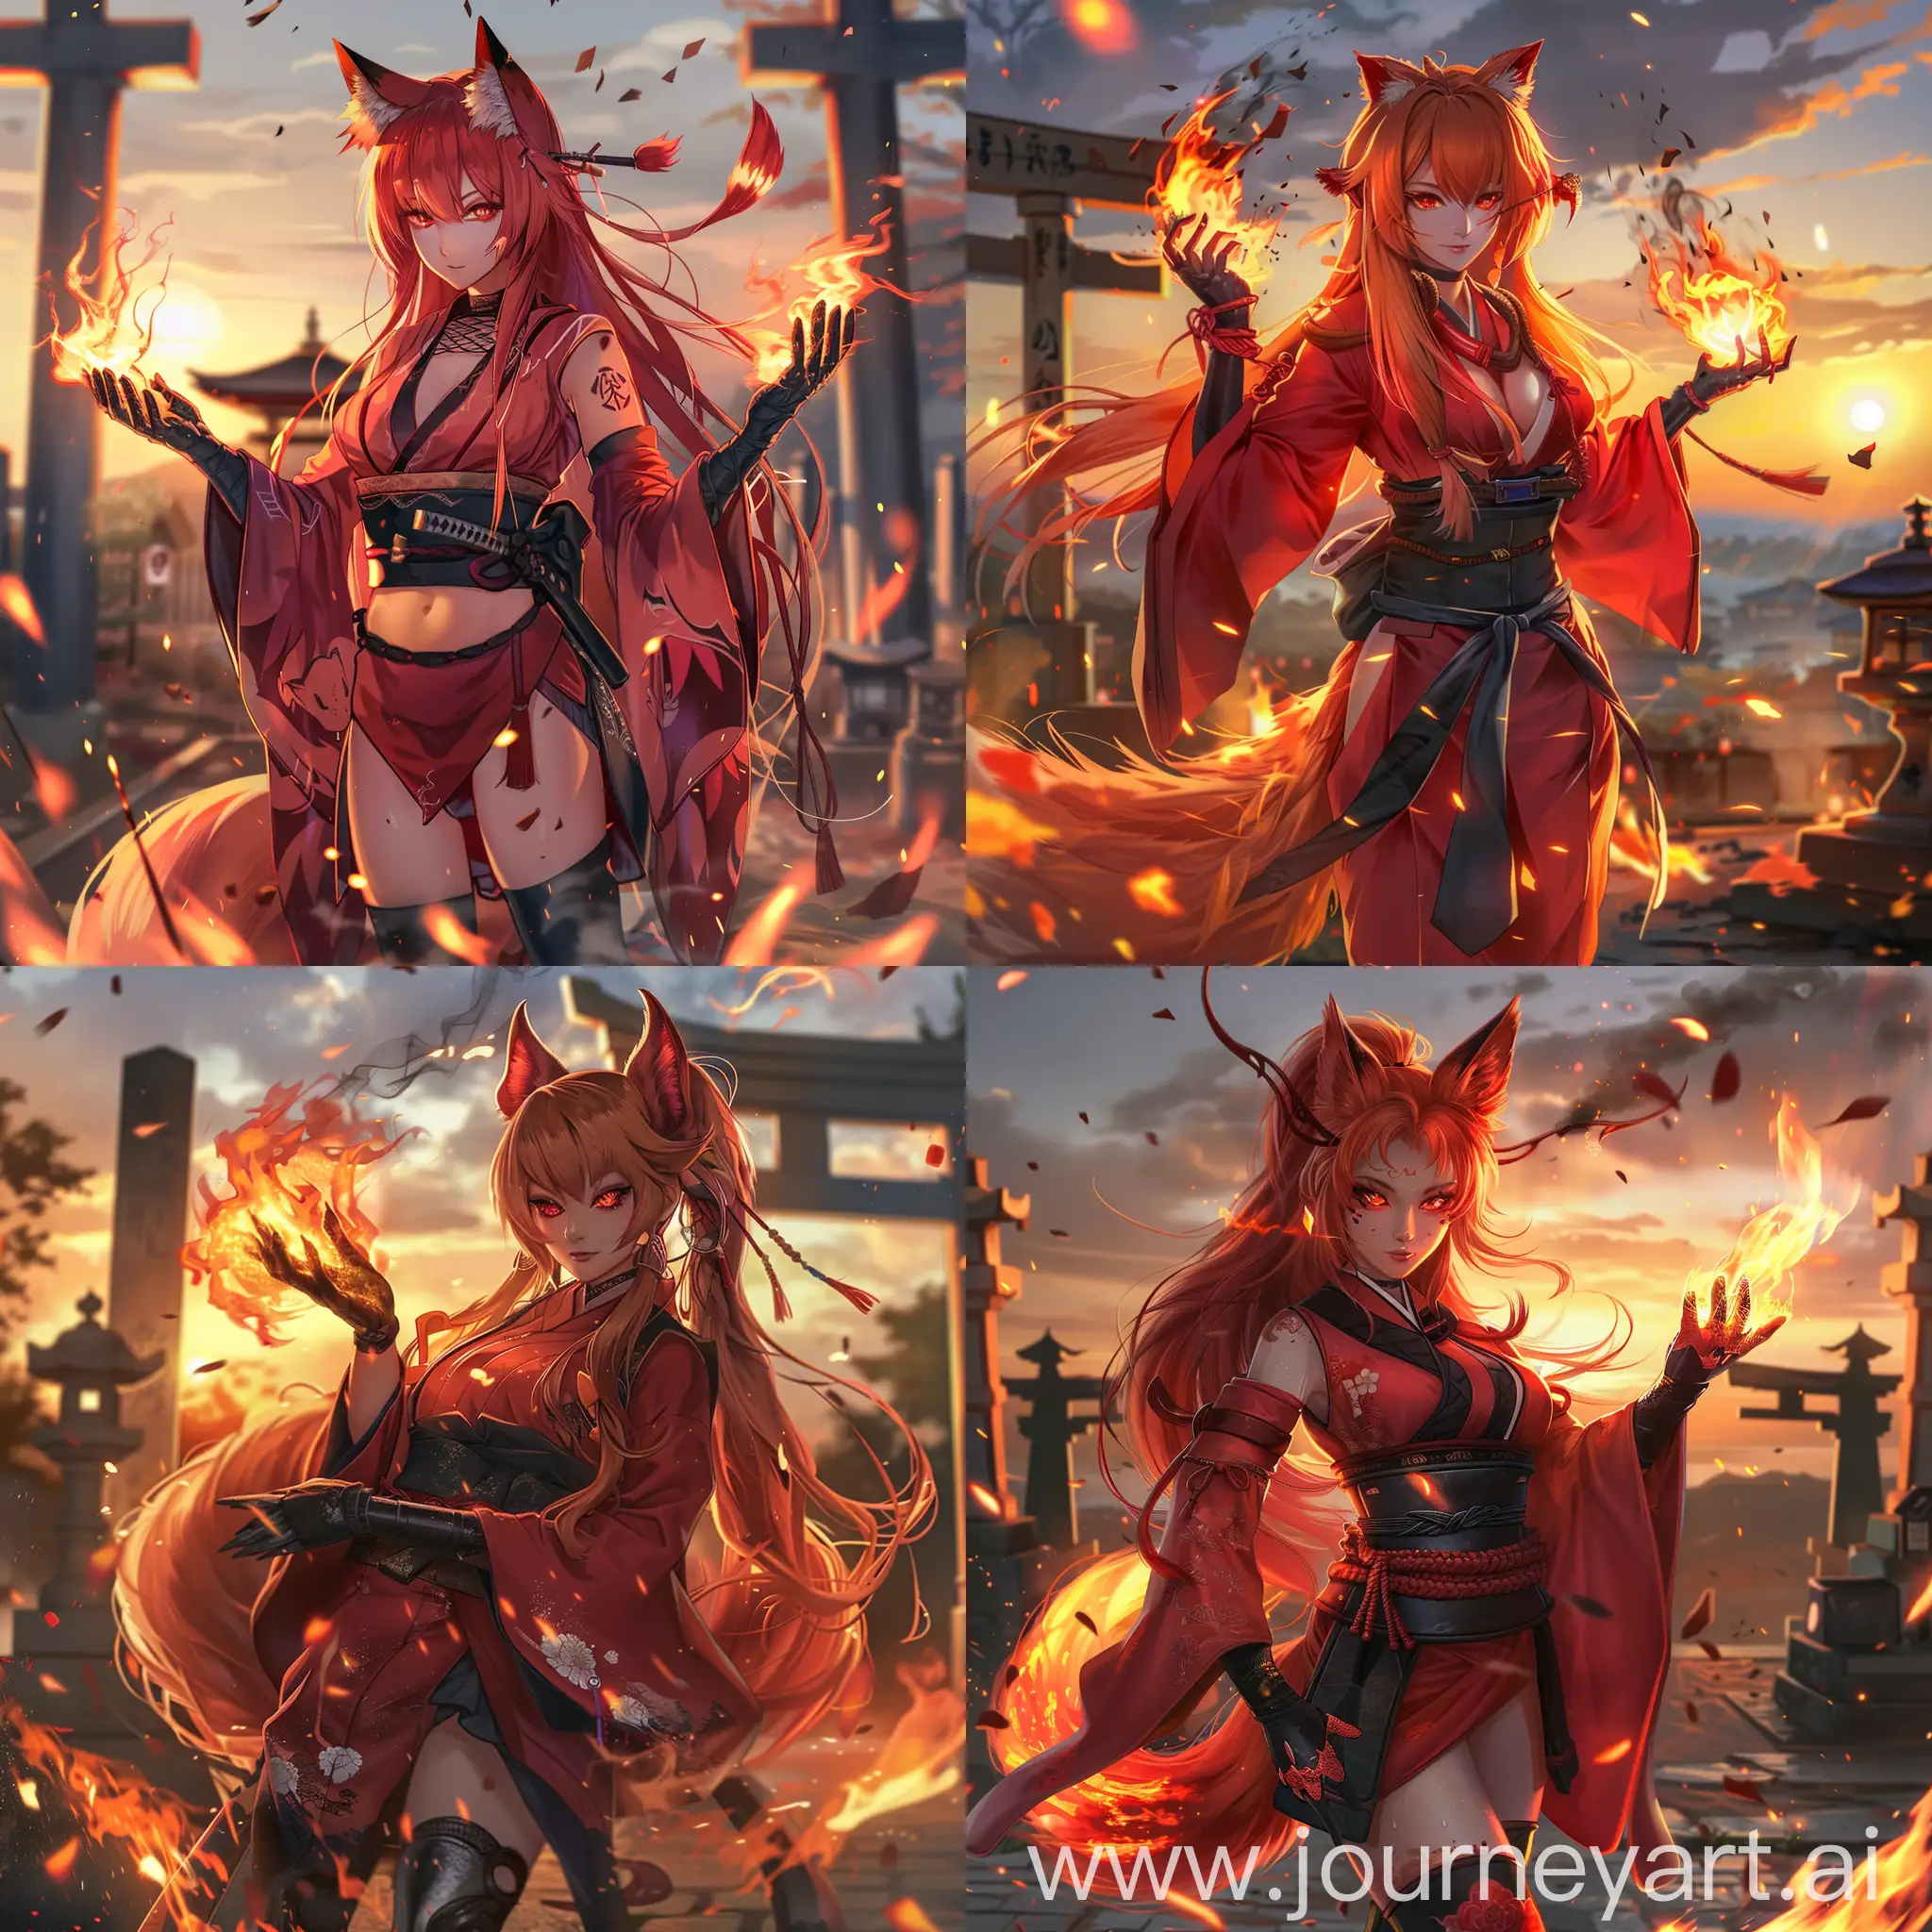 Fiery-Red-Fox-Spirit-Casting-Magic-at-Sunset